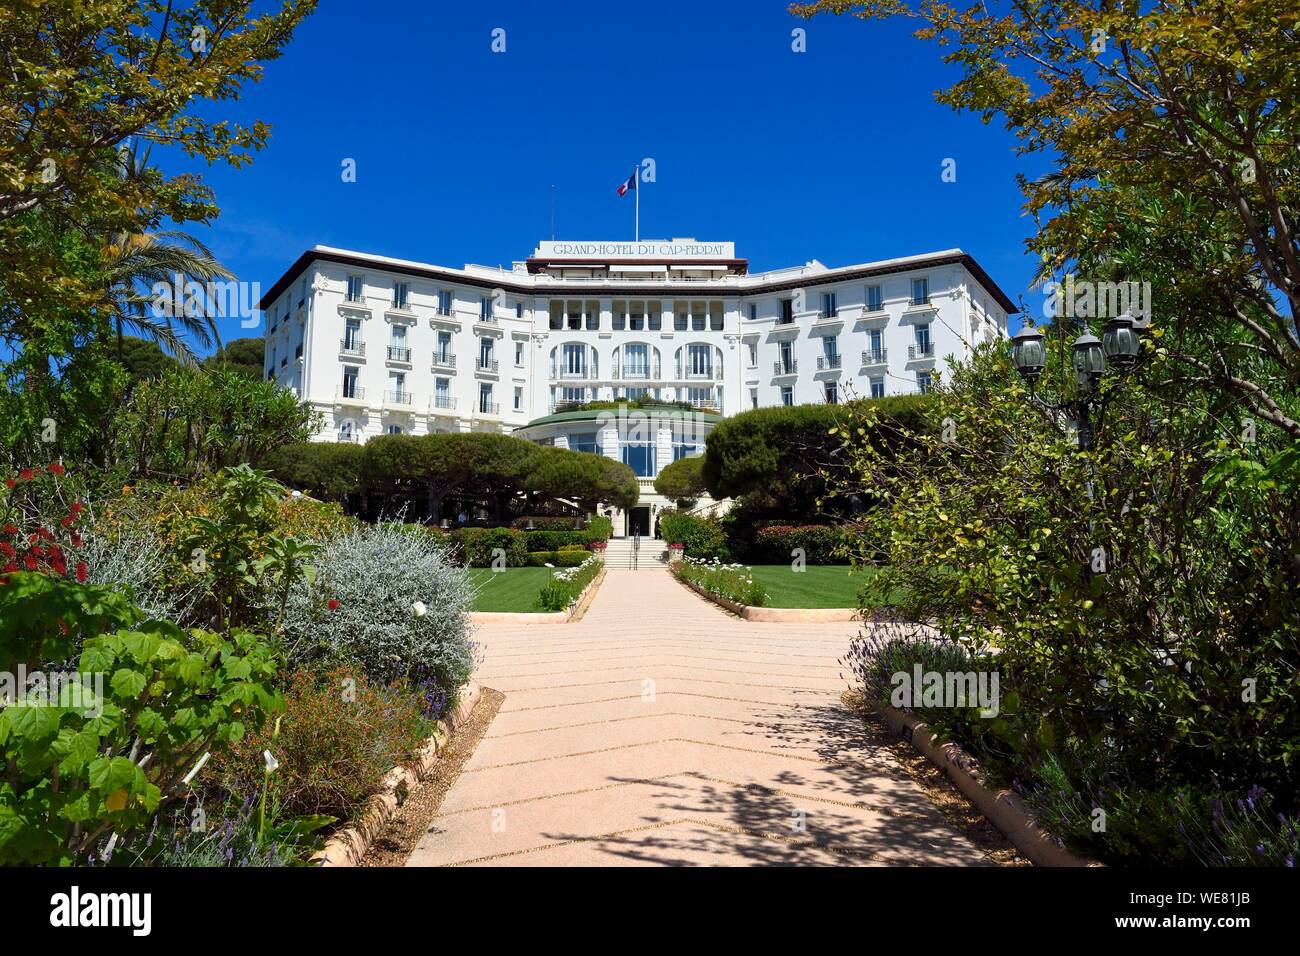 Frankreich, Alpes Maritimes, Saint Jean Cap Ferrat, Grand-Hotel du Cap Ferrat, ein 5-Sterne-Hotel Palace vom Four Seasons Hotel Stockfoto